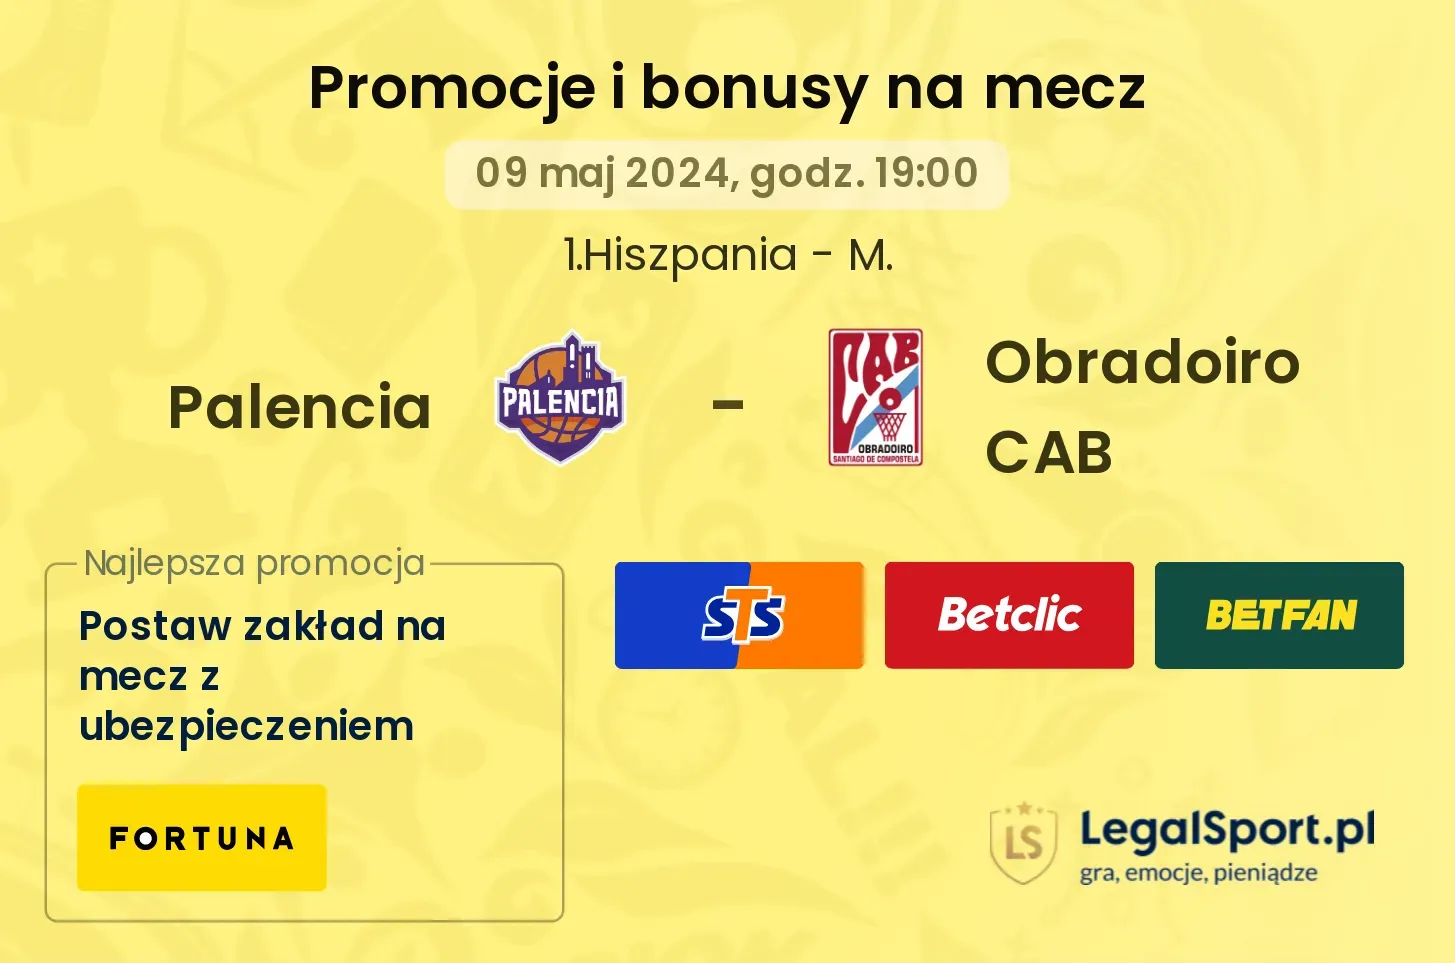 Palencia - Obradoiro CAB promocje bonusy na mecz